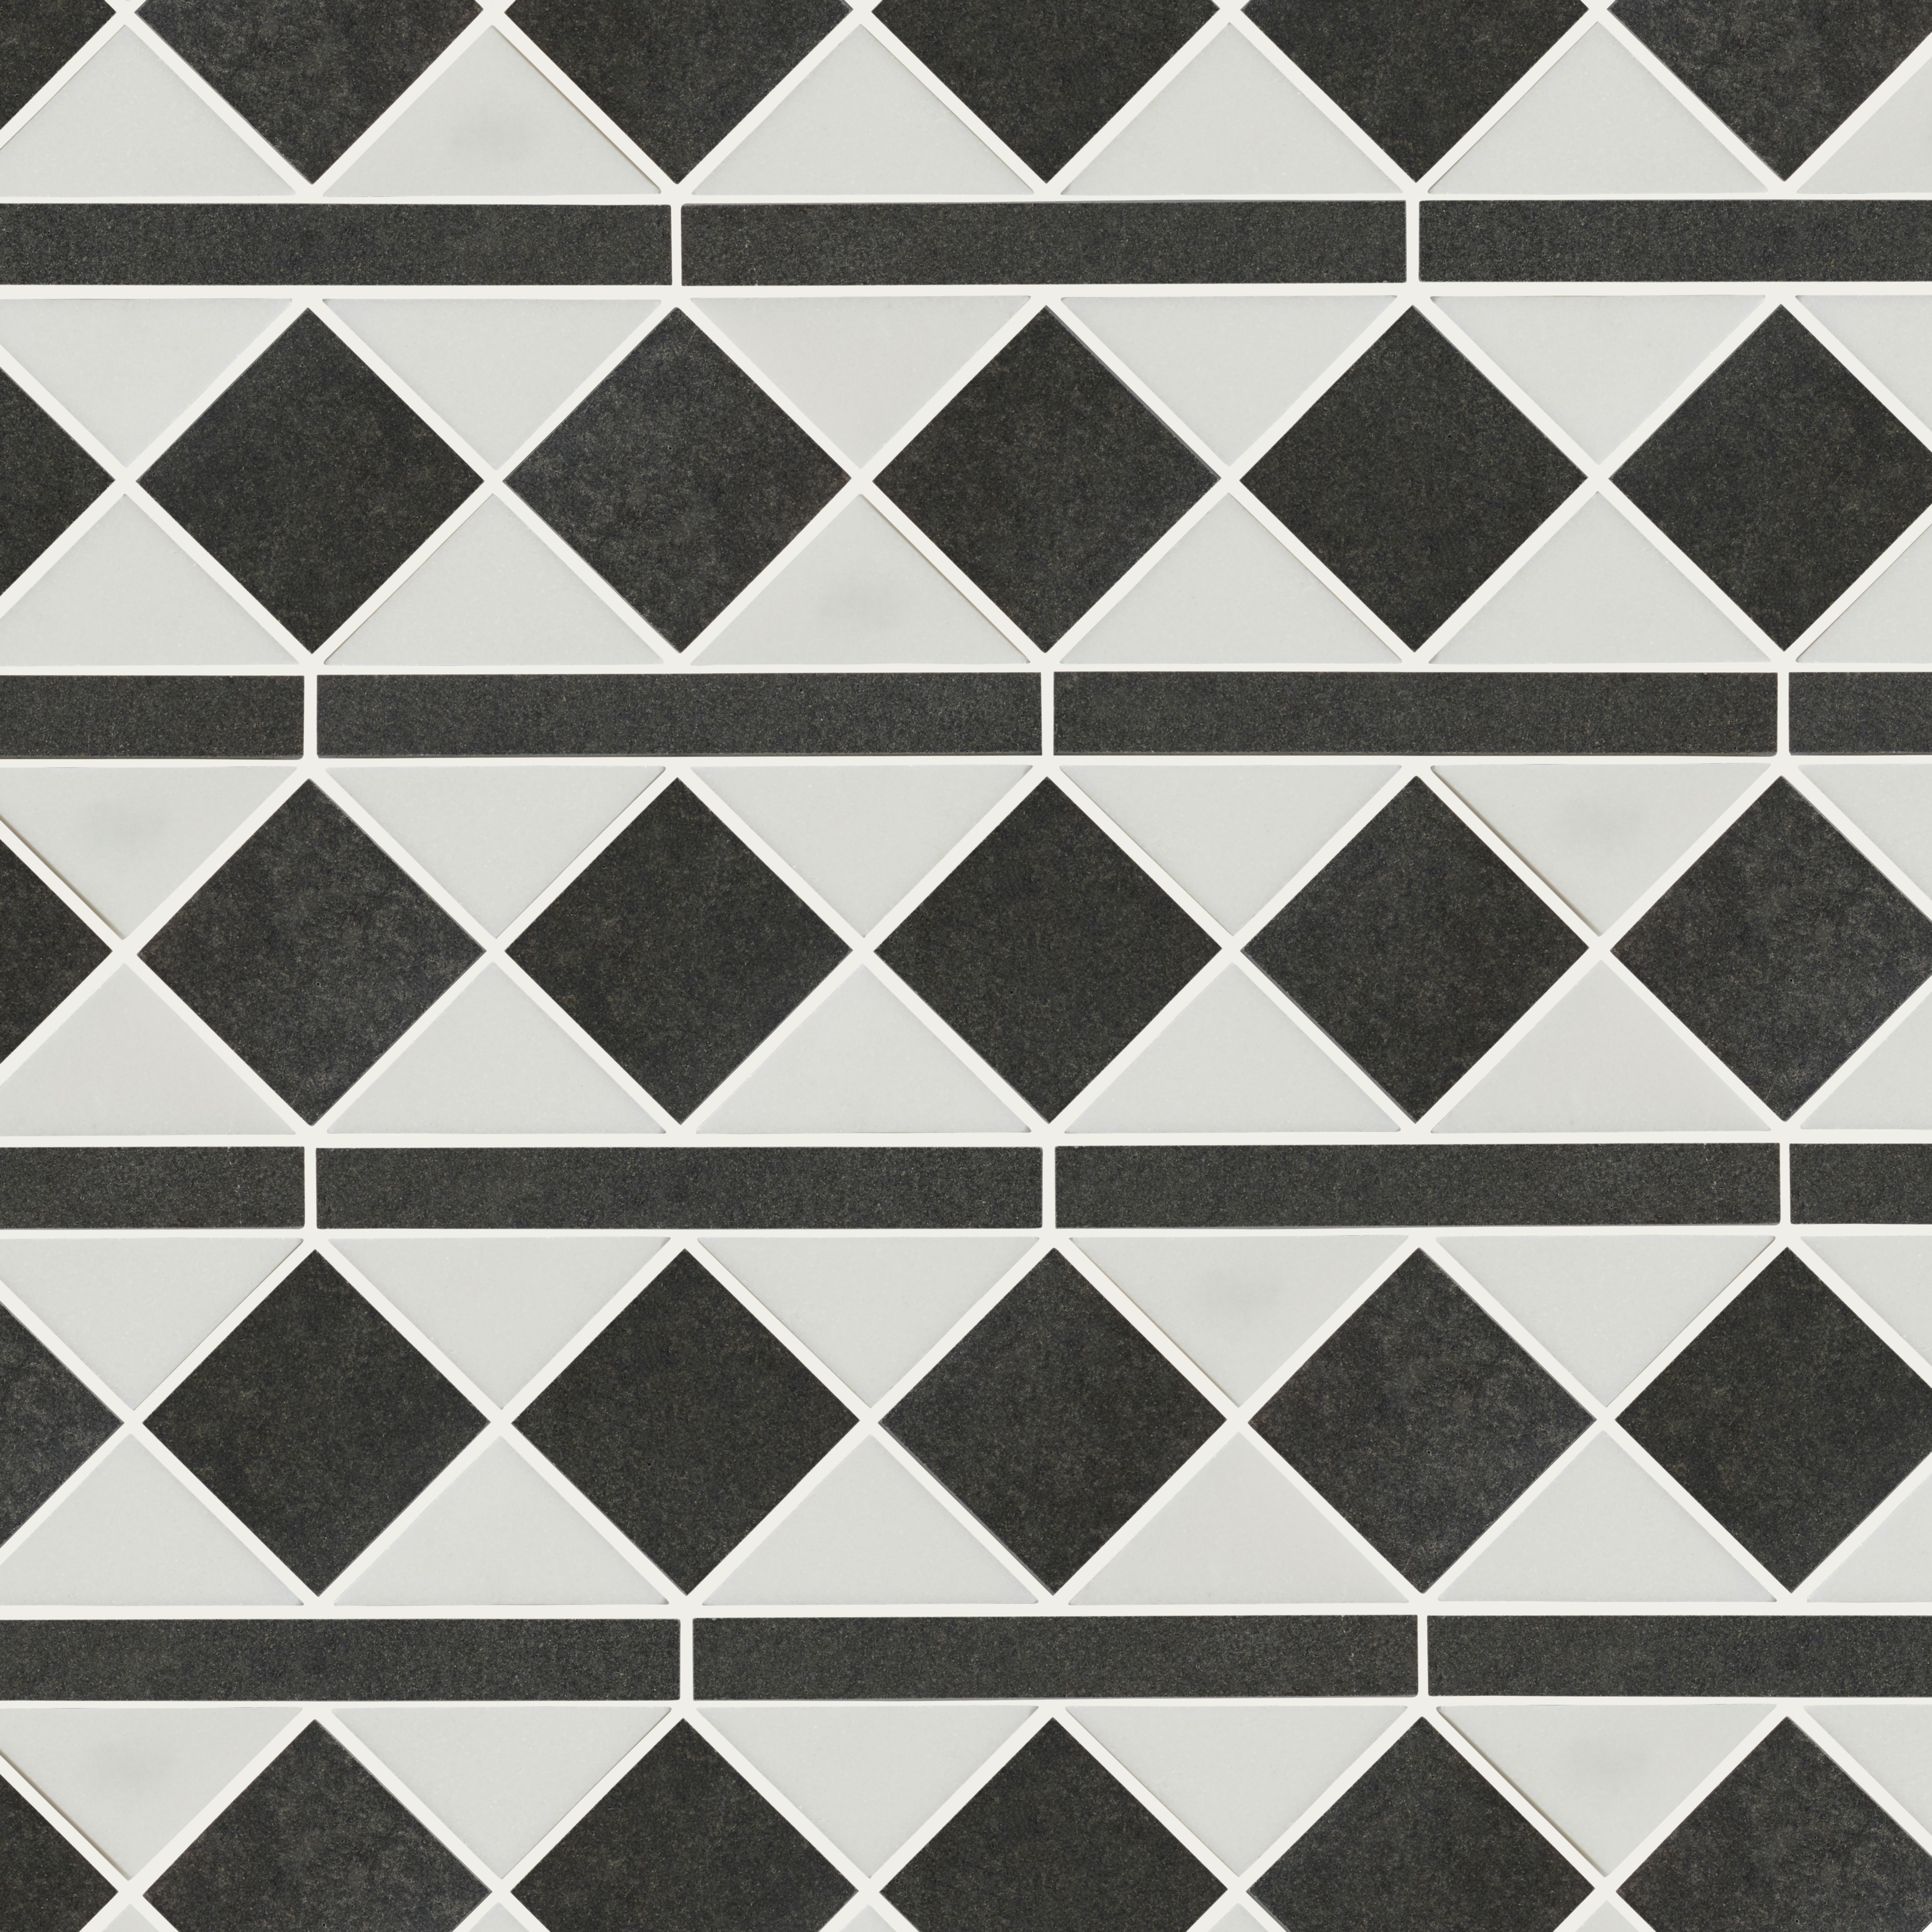 Chikago Black & white Natural stone Border tile, (L)265mm (W)100mm